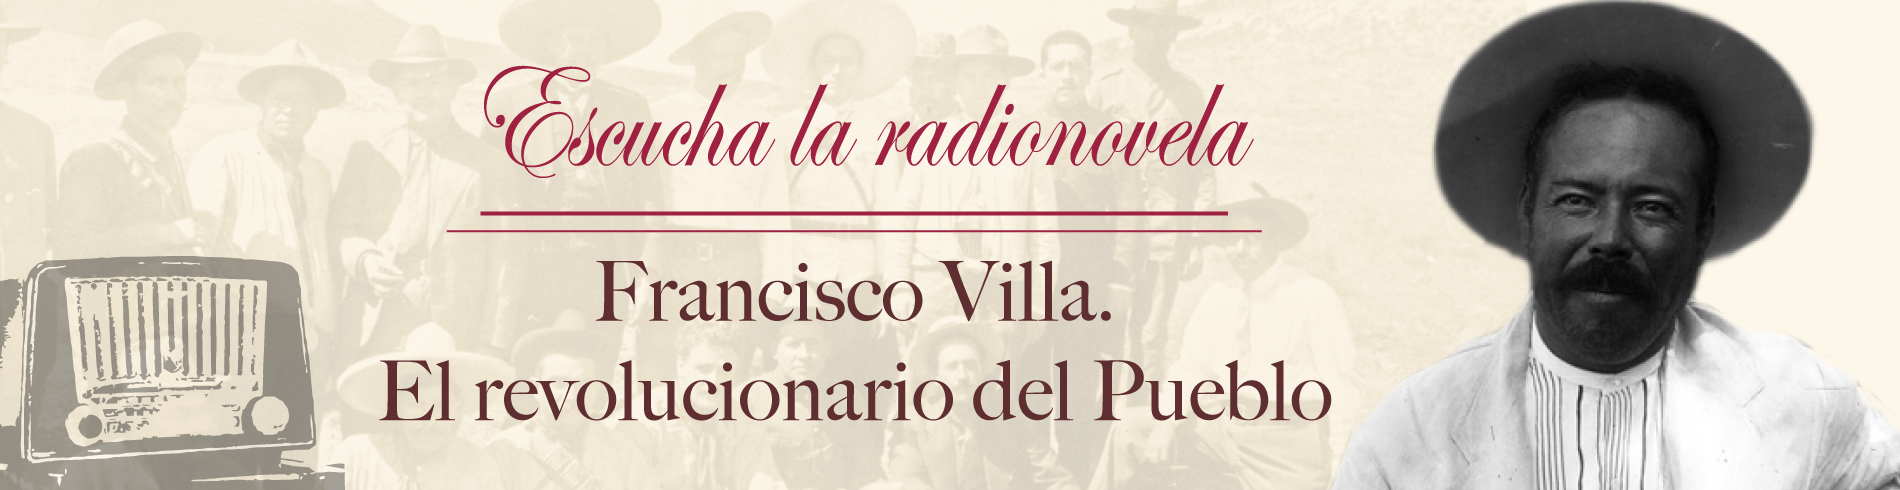 Radio novela, Francisco Villa